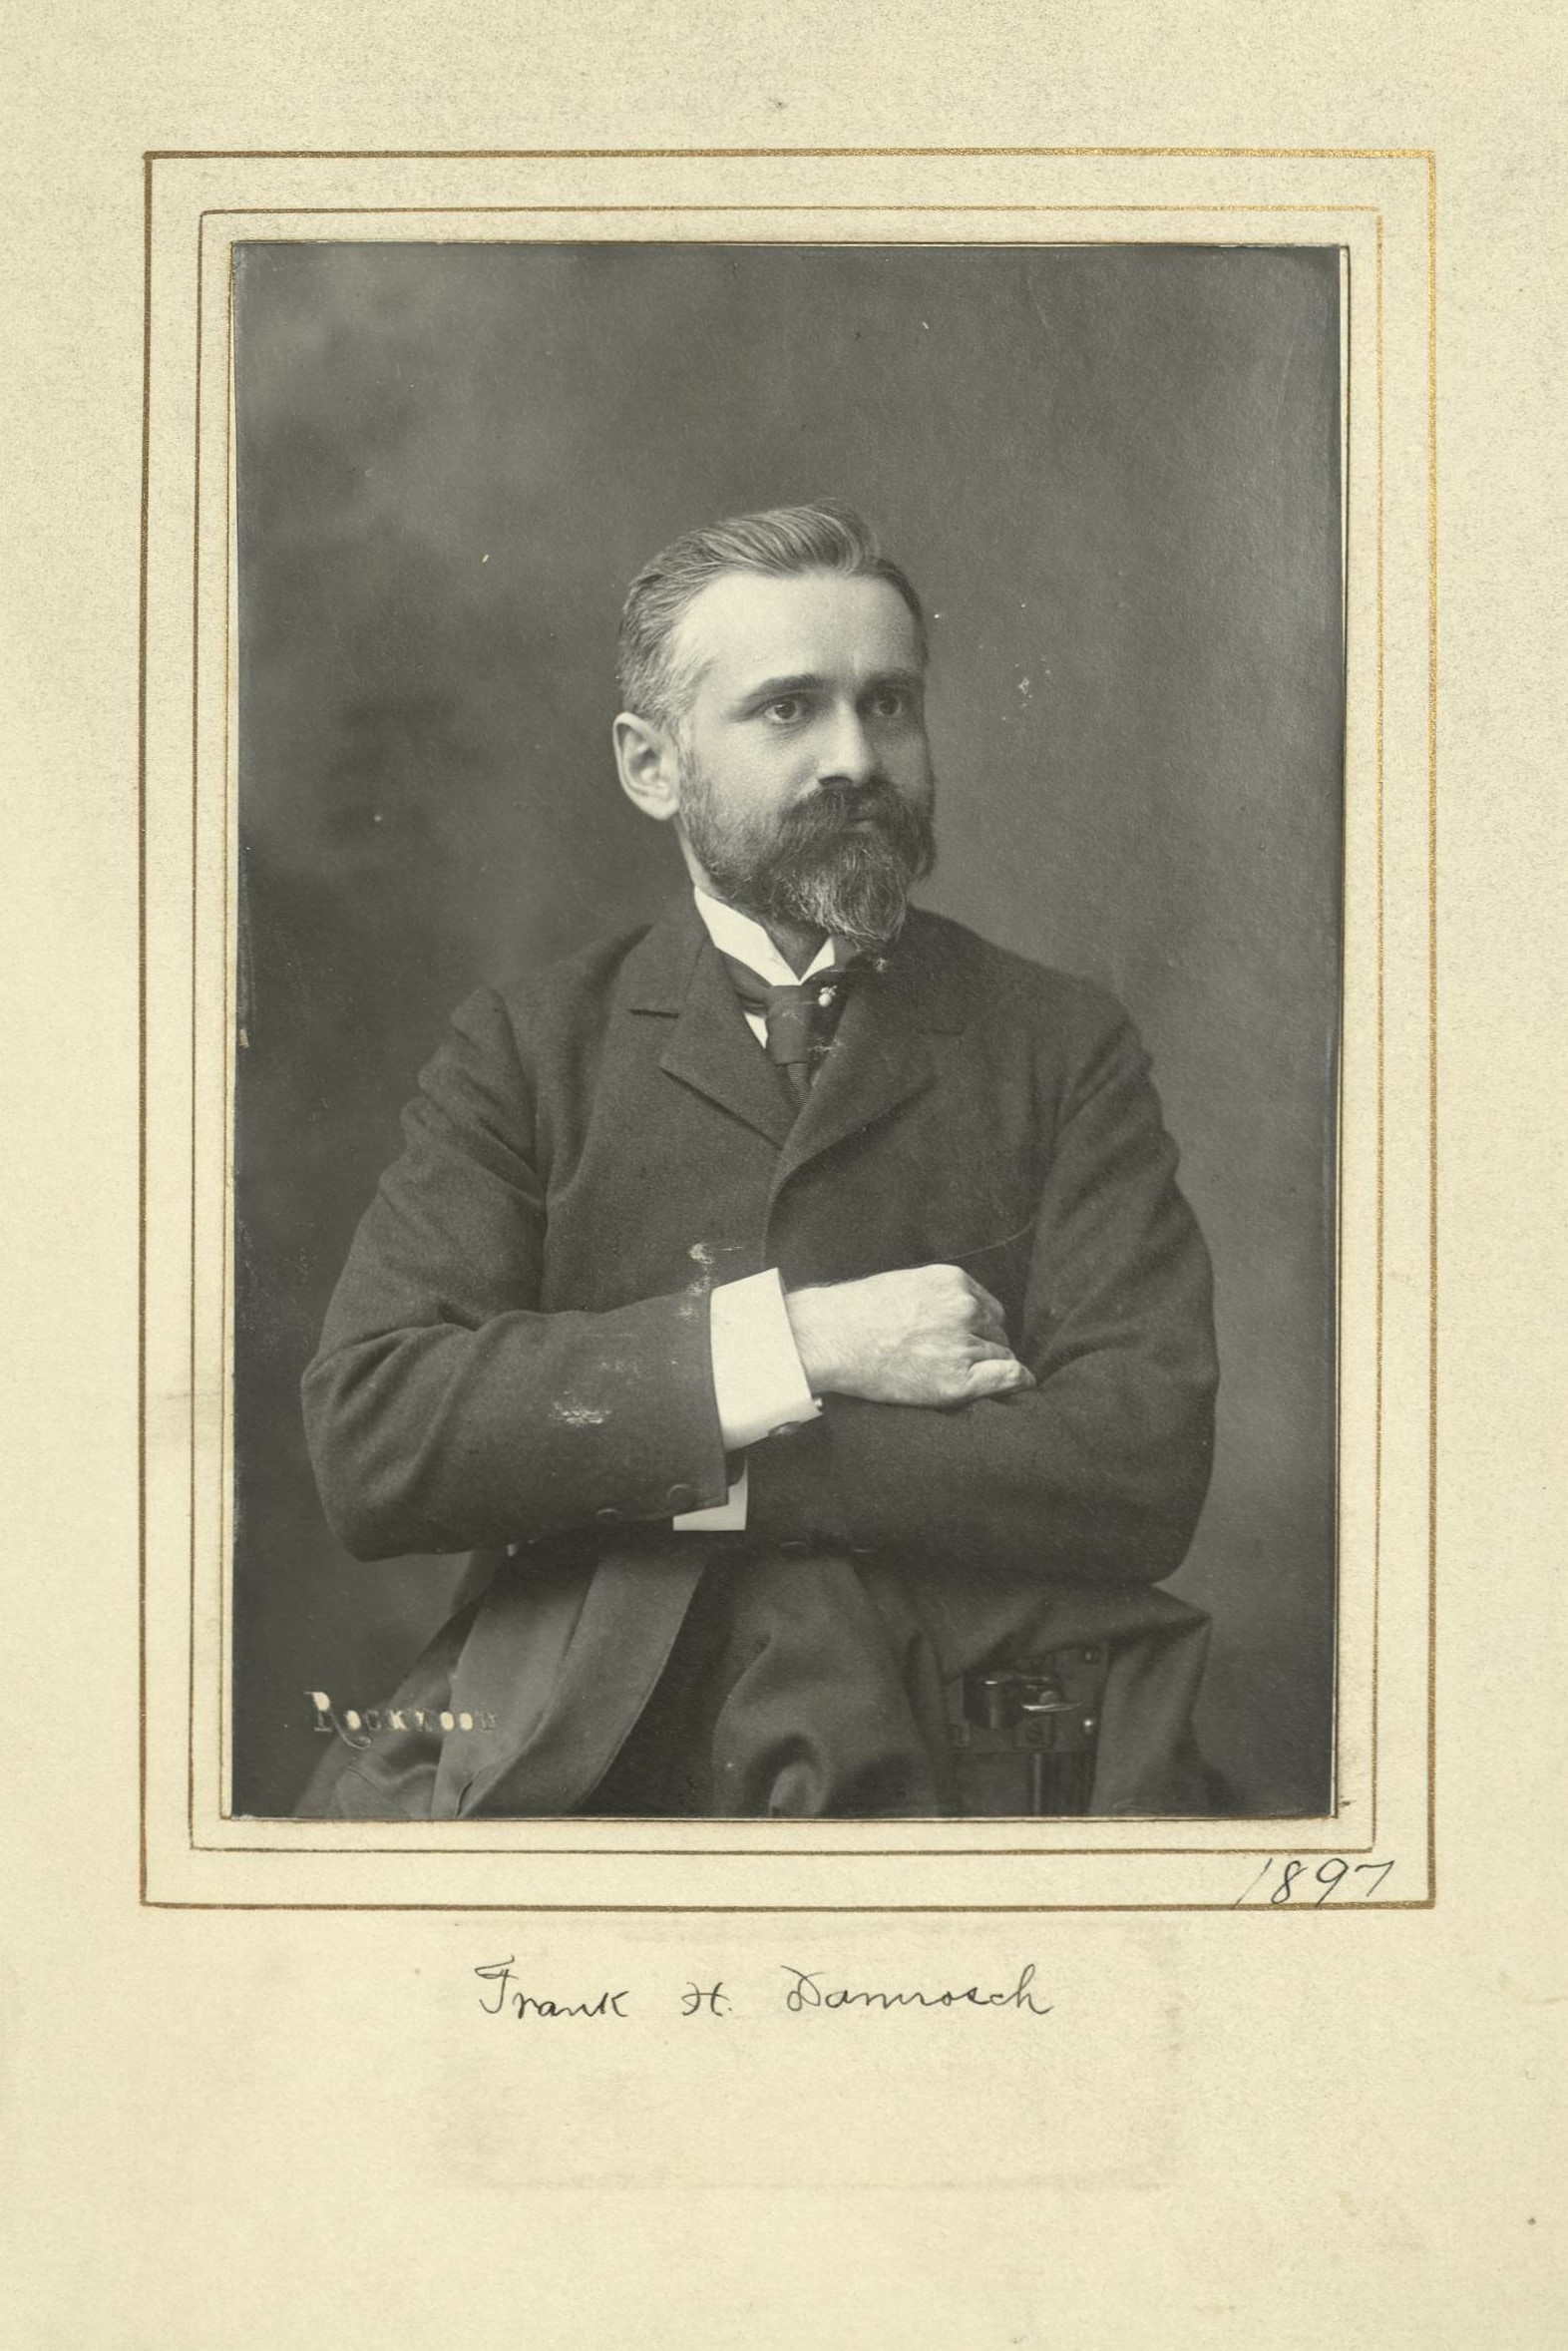 Member portrait of Frank H. Damrosch